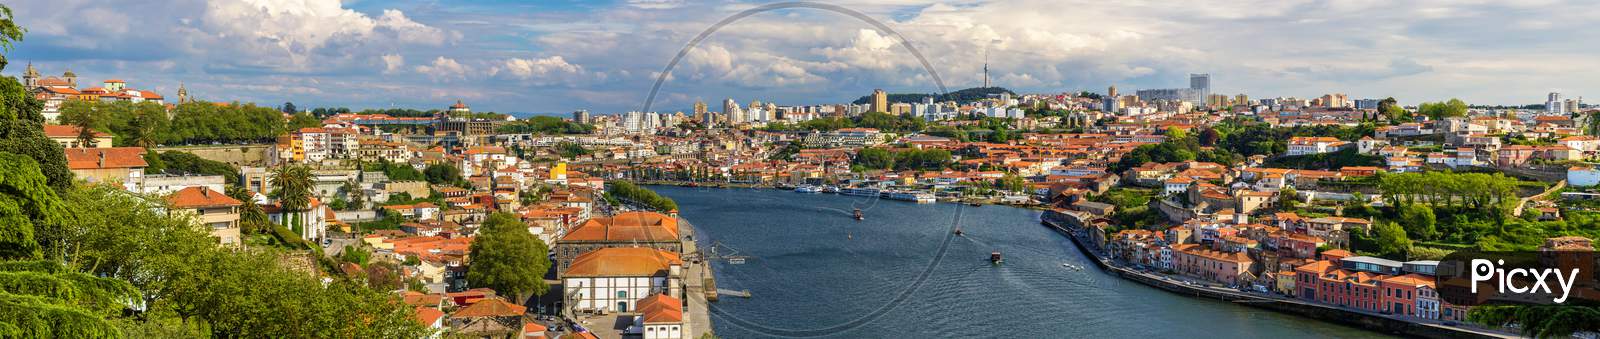 Panorama Of Porto And The Douro River - Portugal